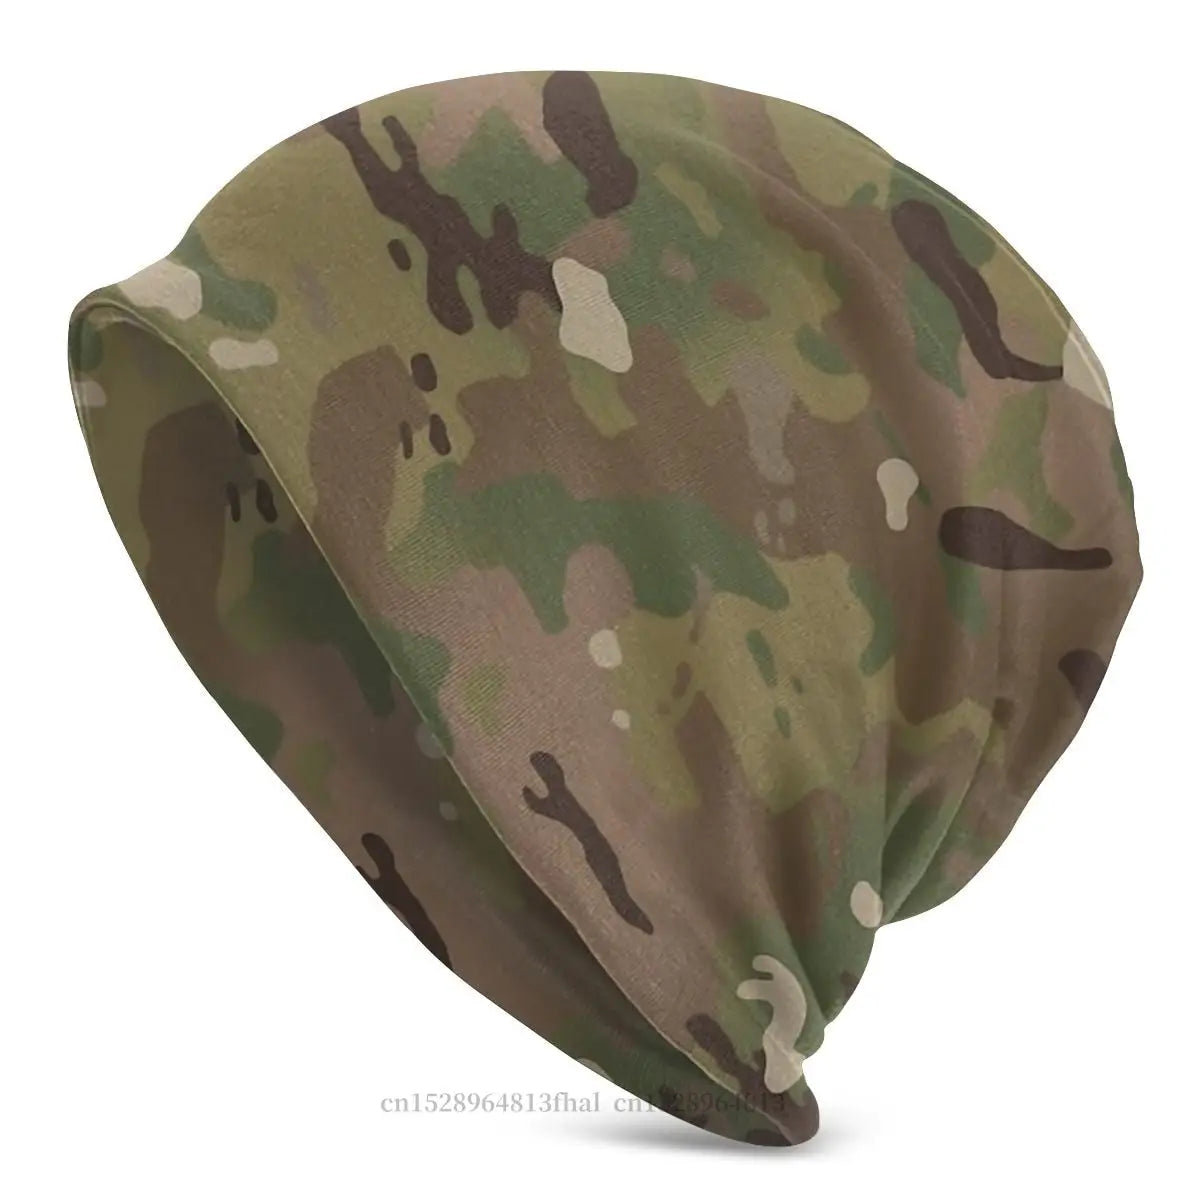 Bonnet camouflage fashion